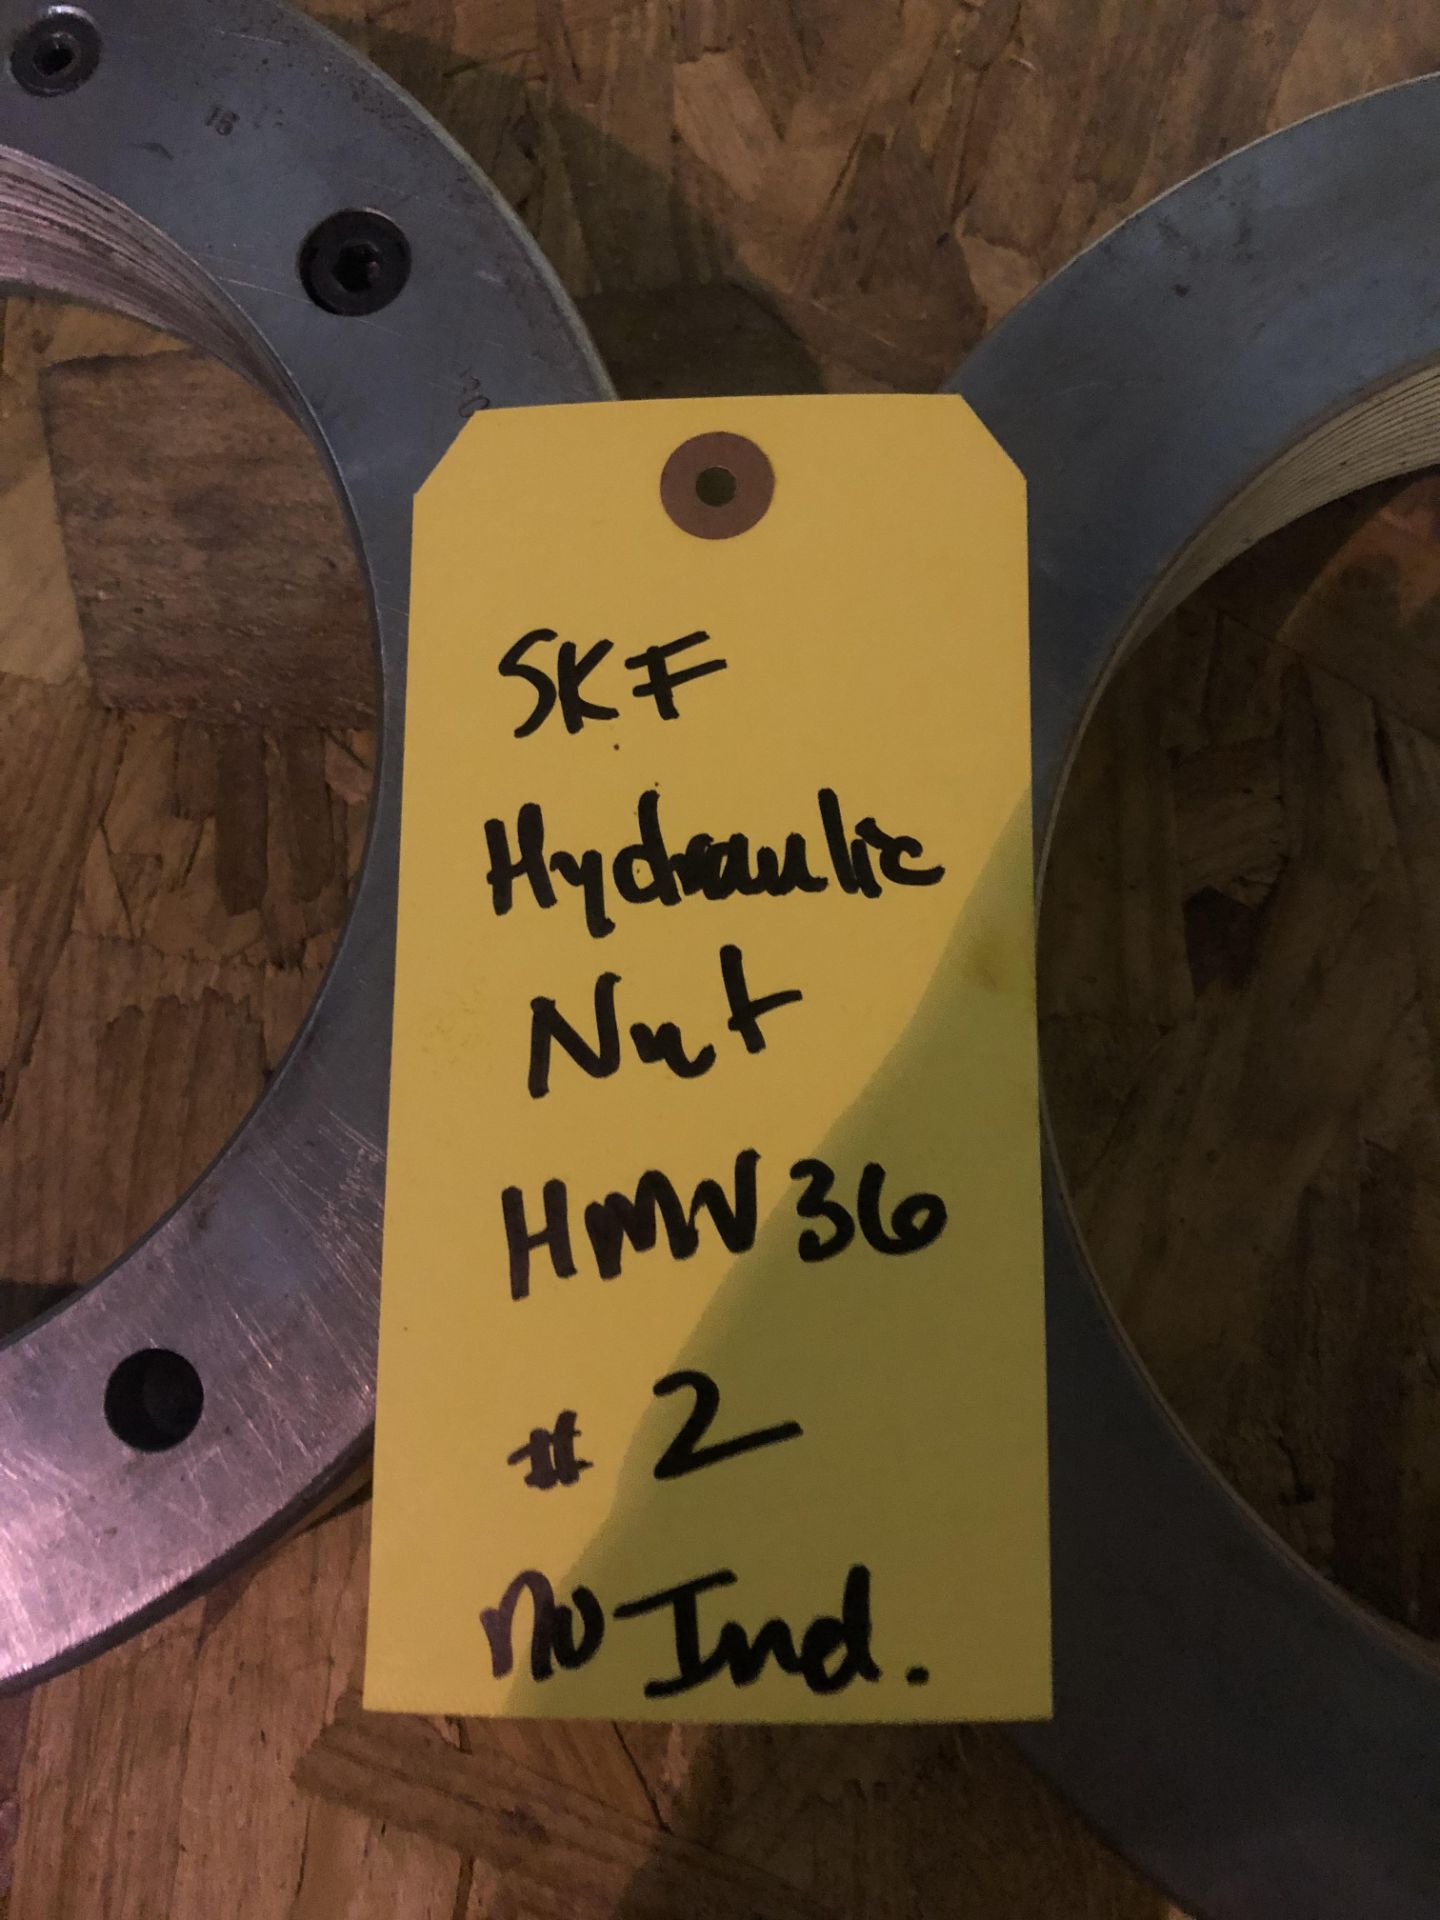 Lot of 2 SKF Hydraulic Nut RIGGING/LOADING FEE - $50 - Image 2 of 2